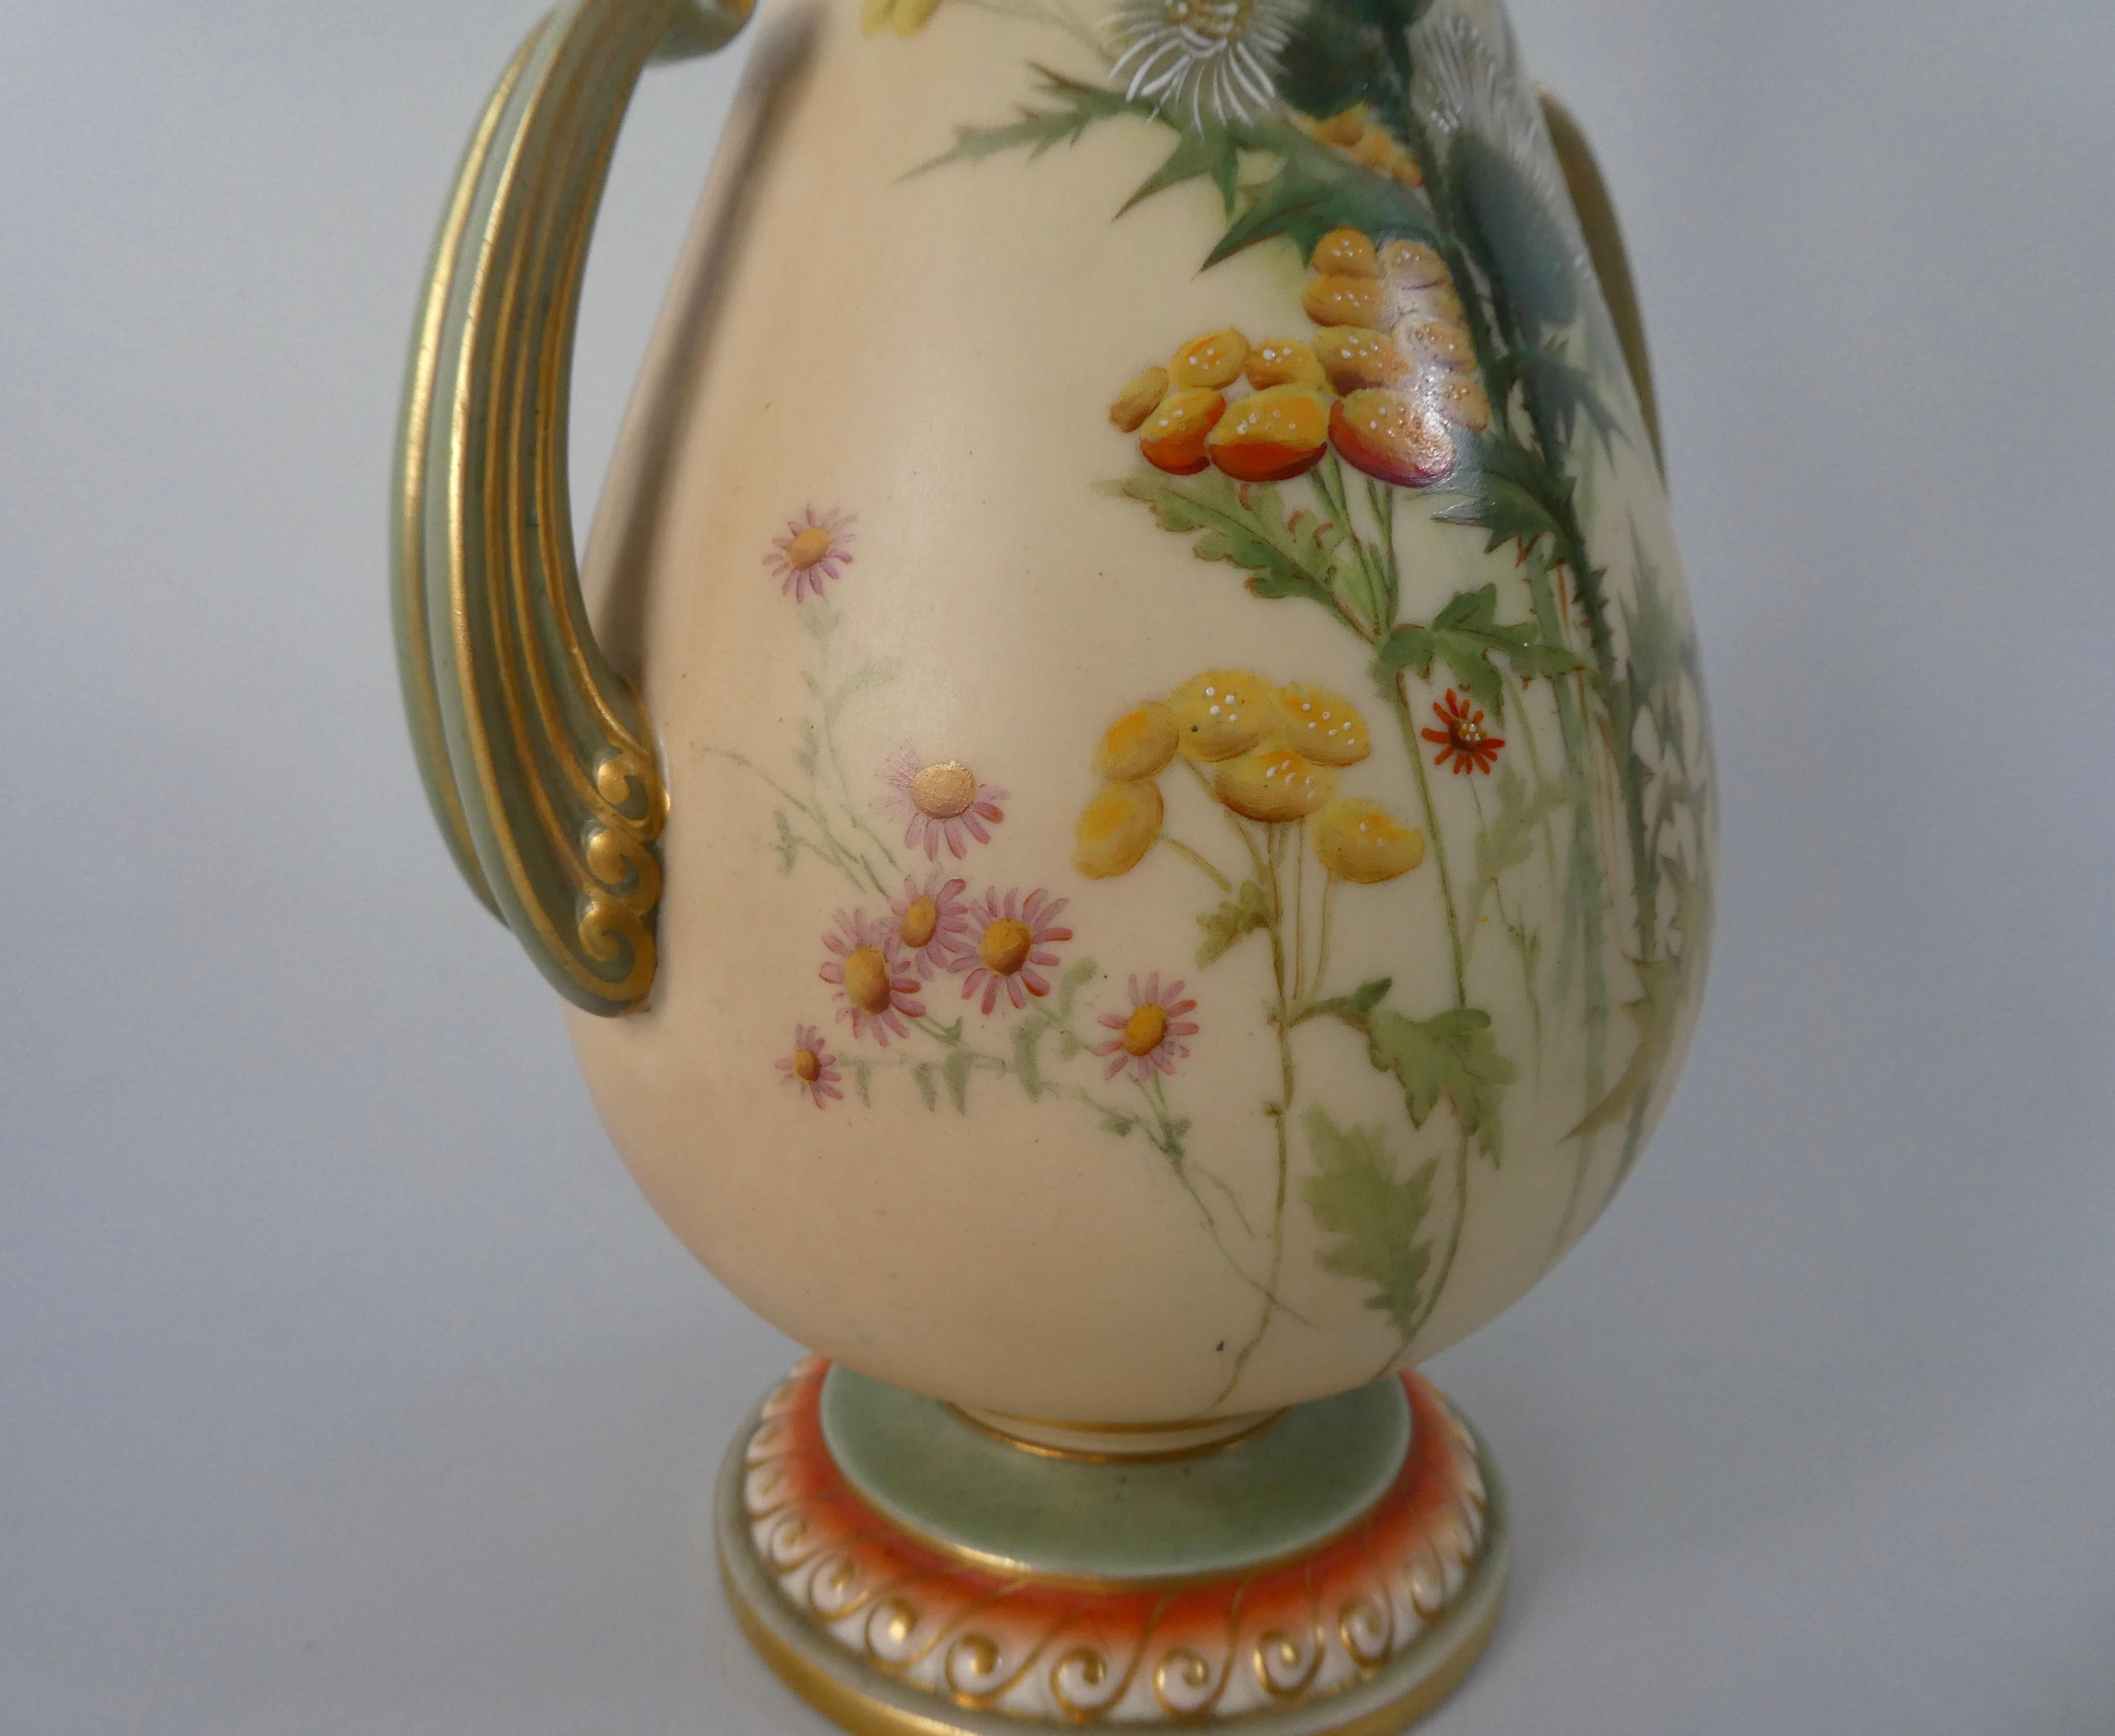 Late Victorian Royal Worcester Porcelain Vase, Thistle Decoration, Dated 1901